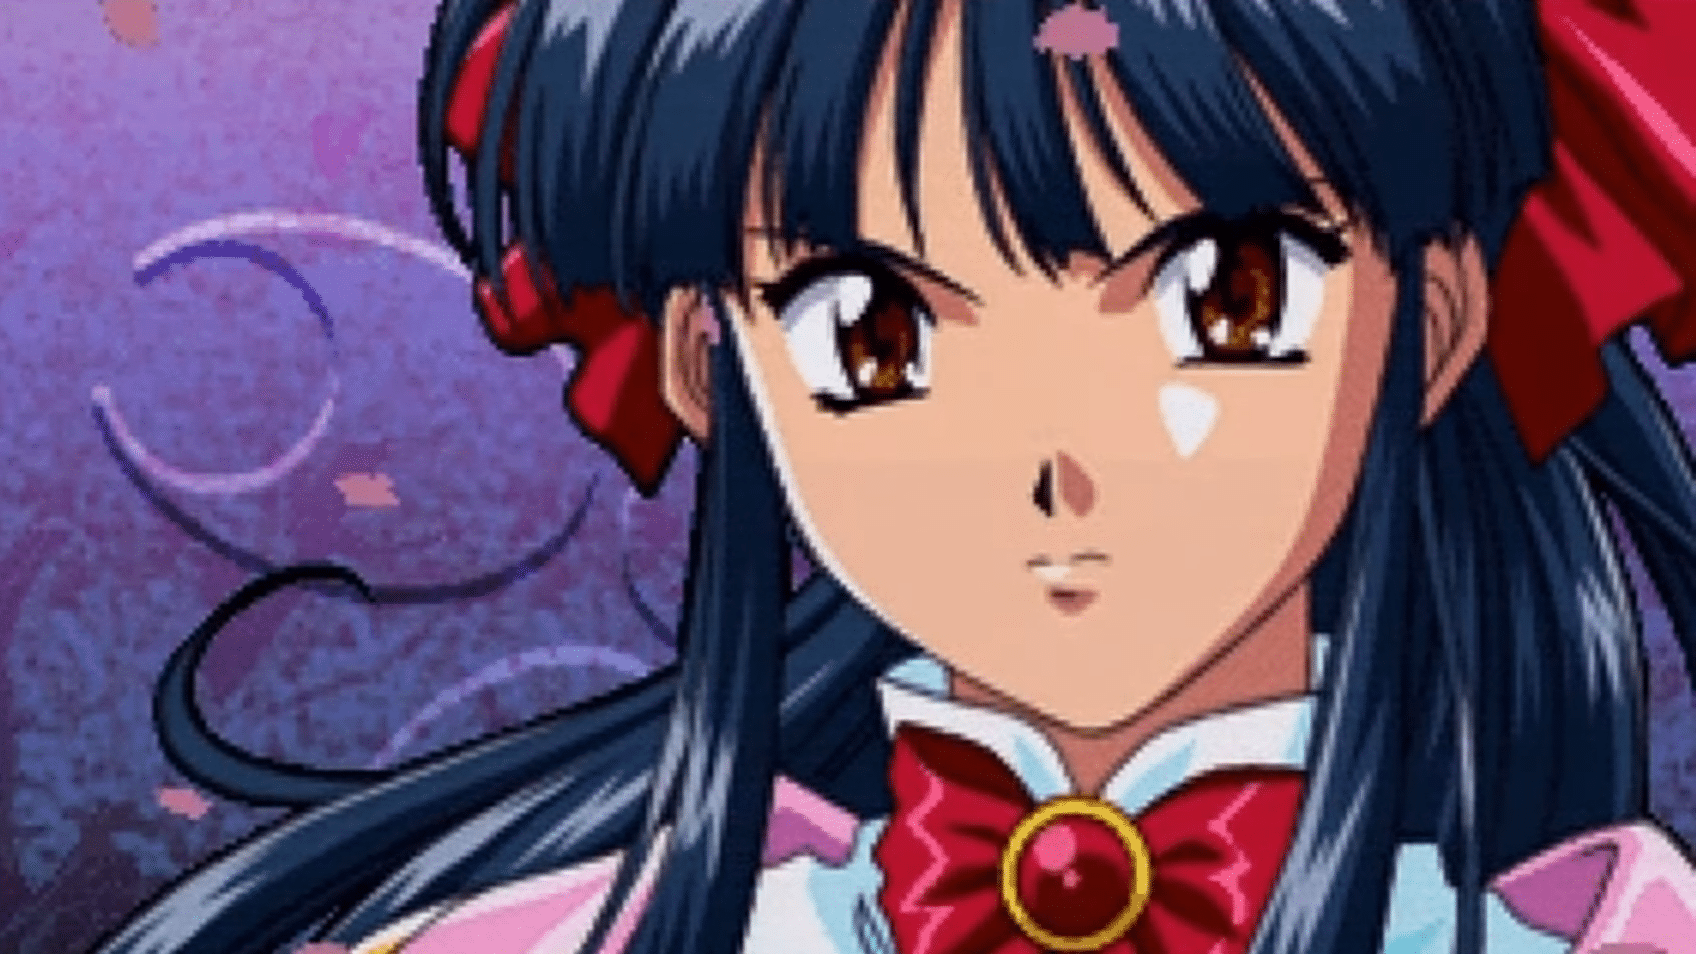 Sakura Wars 2 English Fan Translation Announced; Most Translation Complete